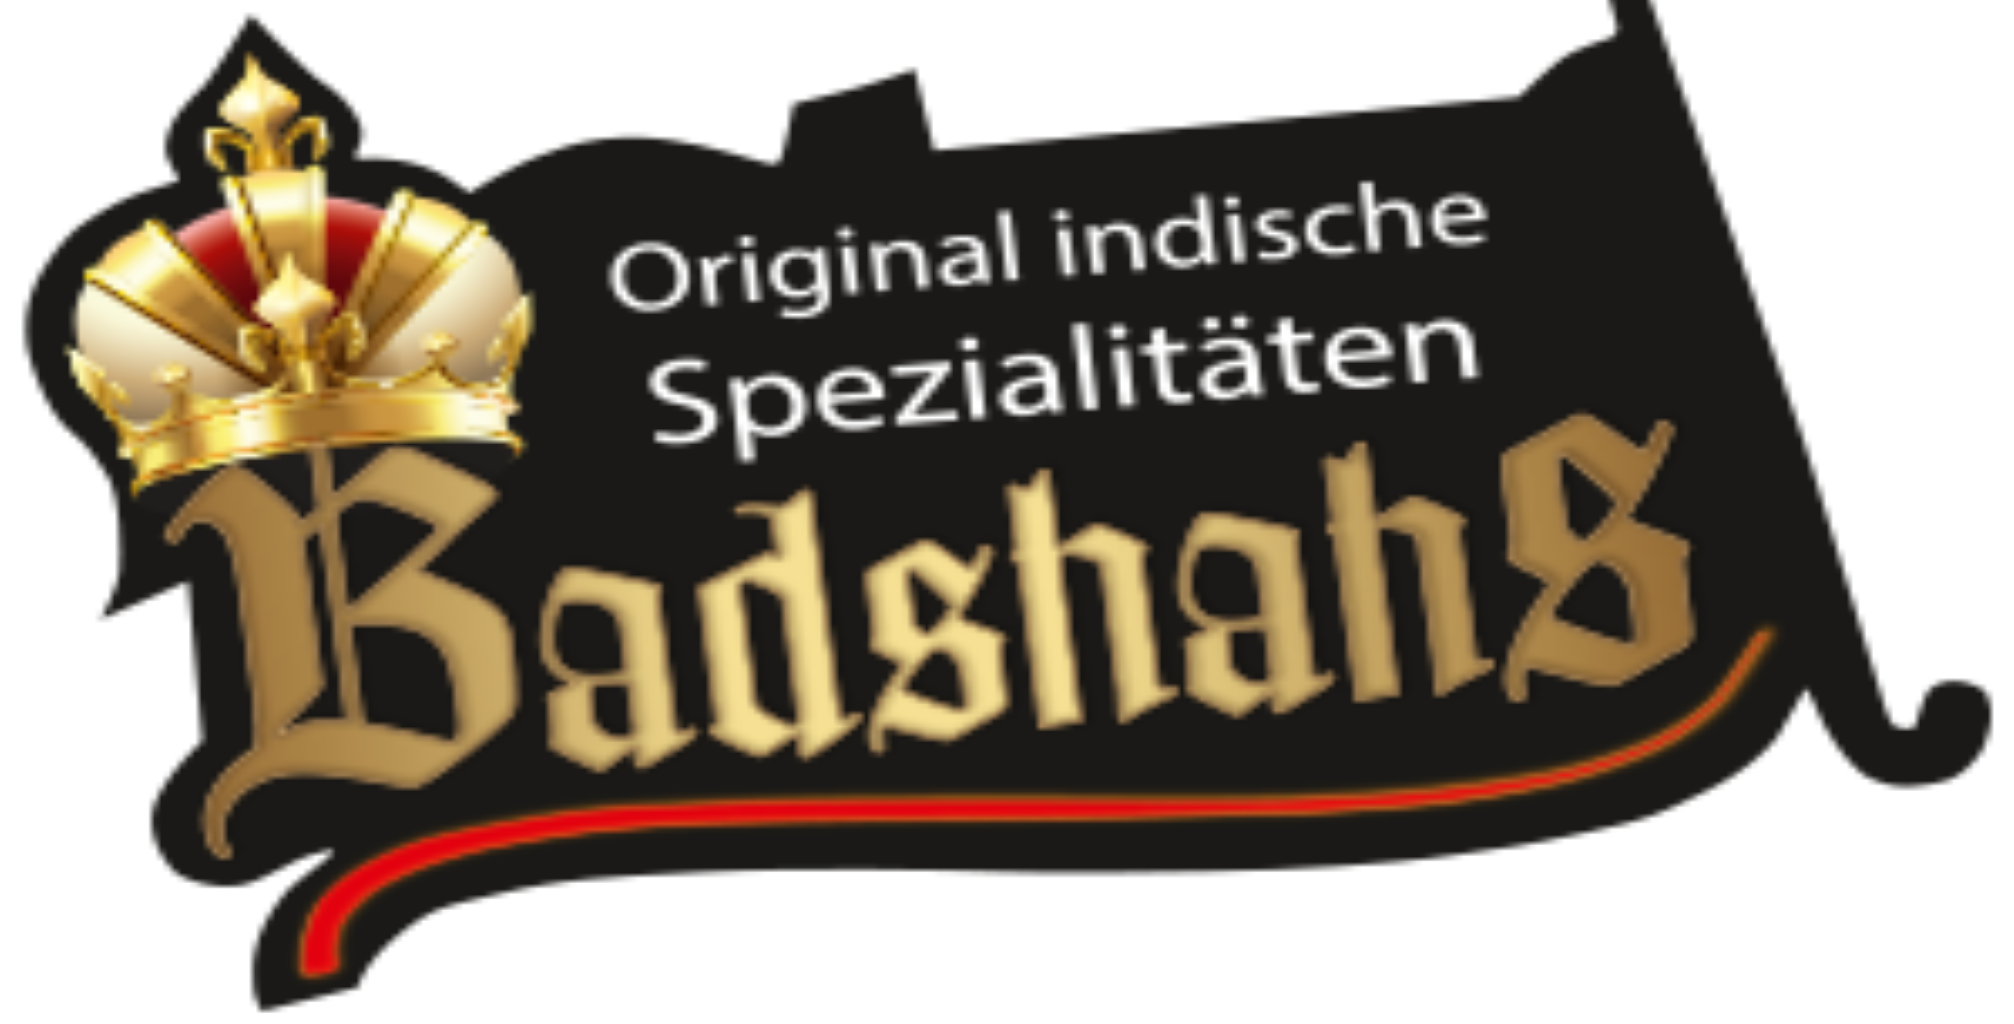 Badshahs Restaurant Logo - Webdesign - Berlin